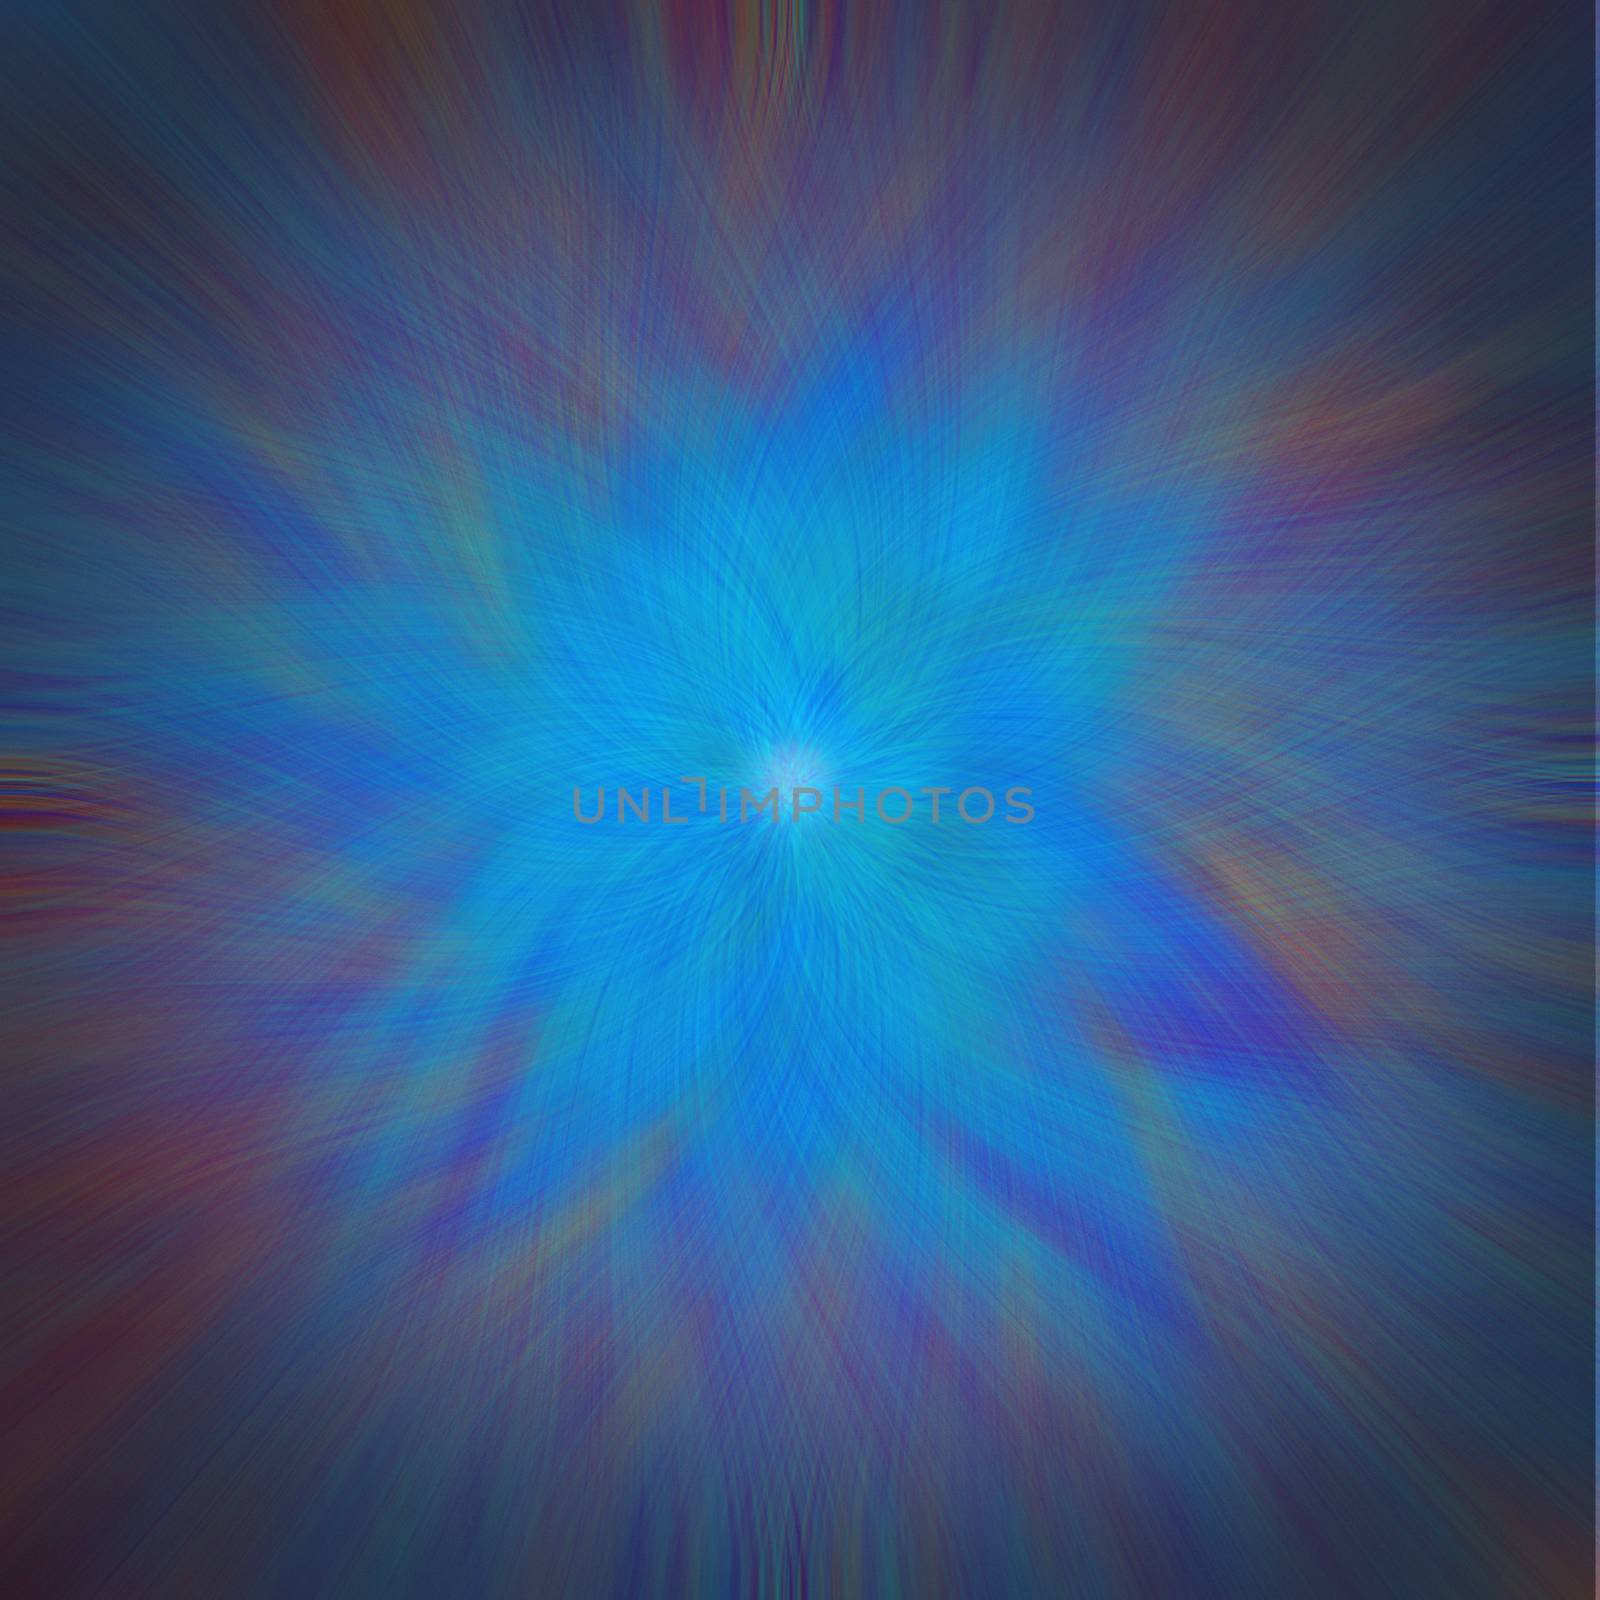 Abstract vortex concept illustation, predominantly blue